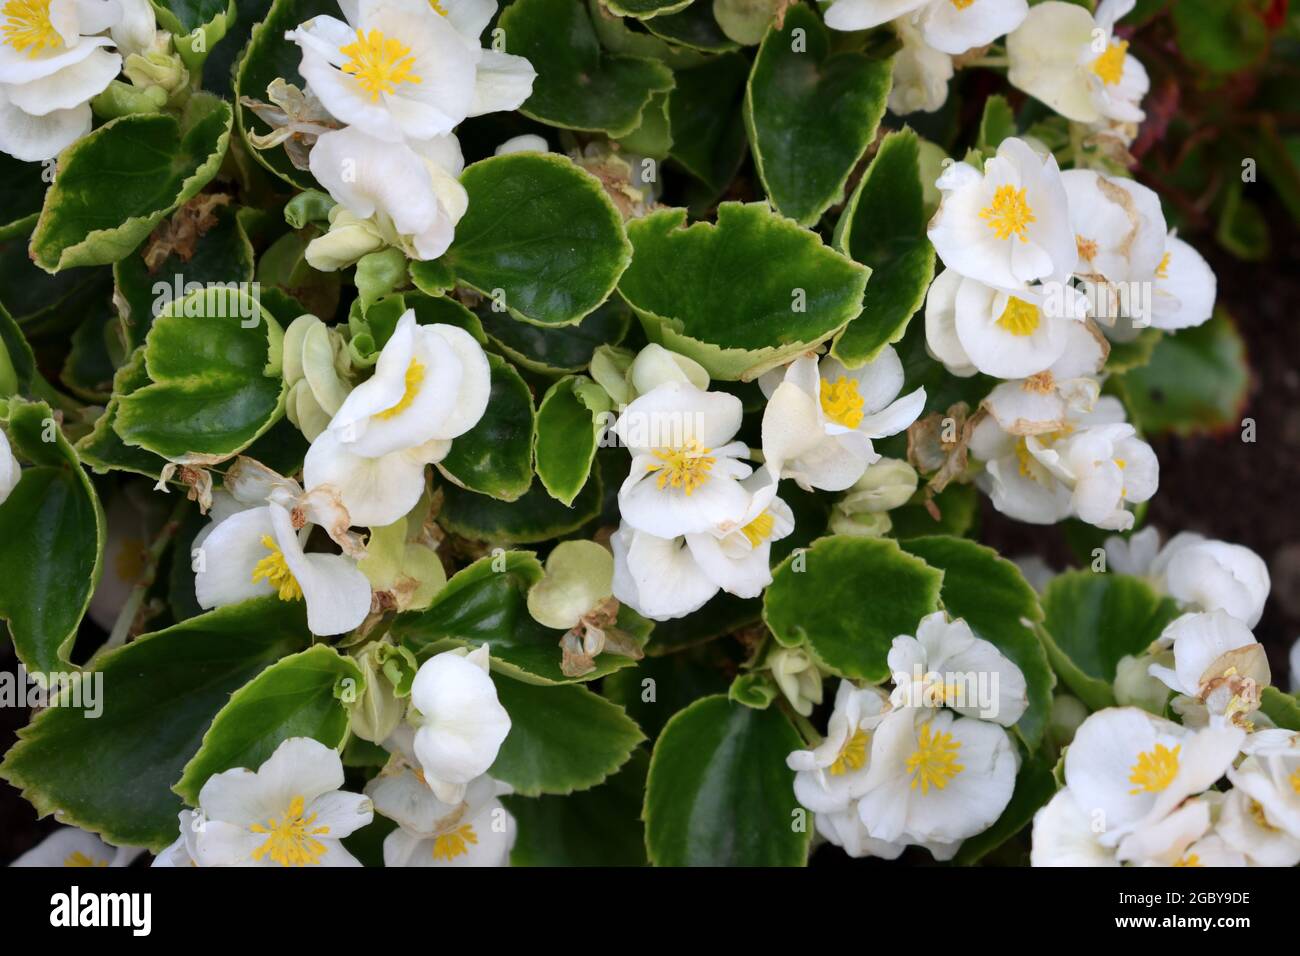 foto di fiori bianchi utili per sfondi , poster, carte. Foto Stock